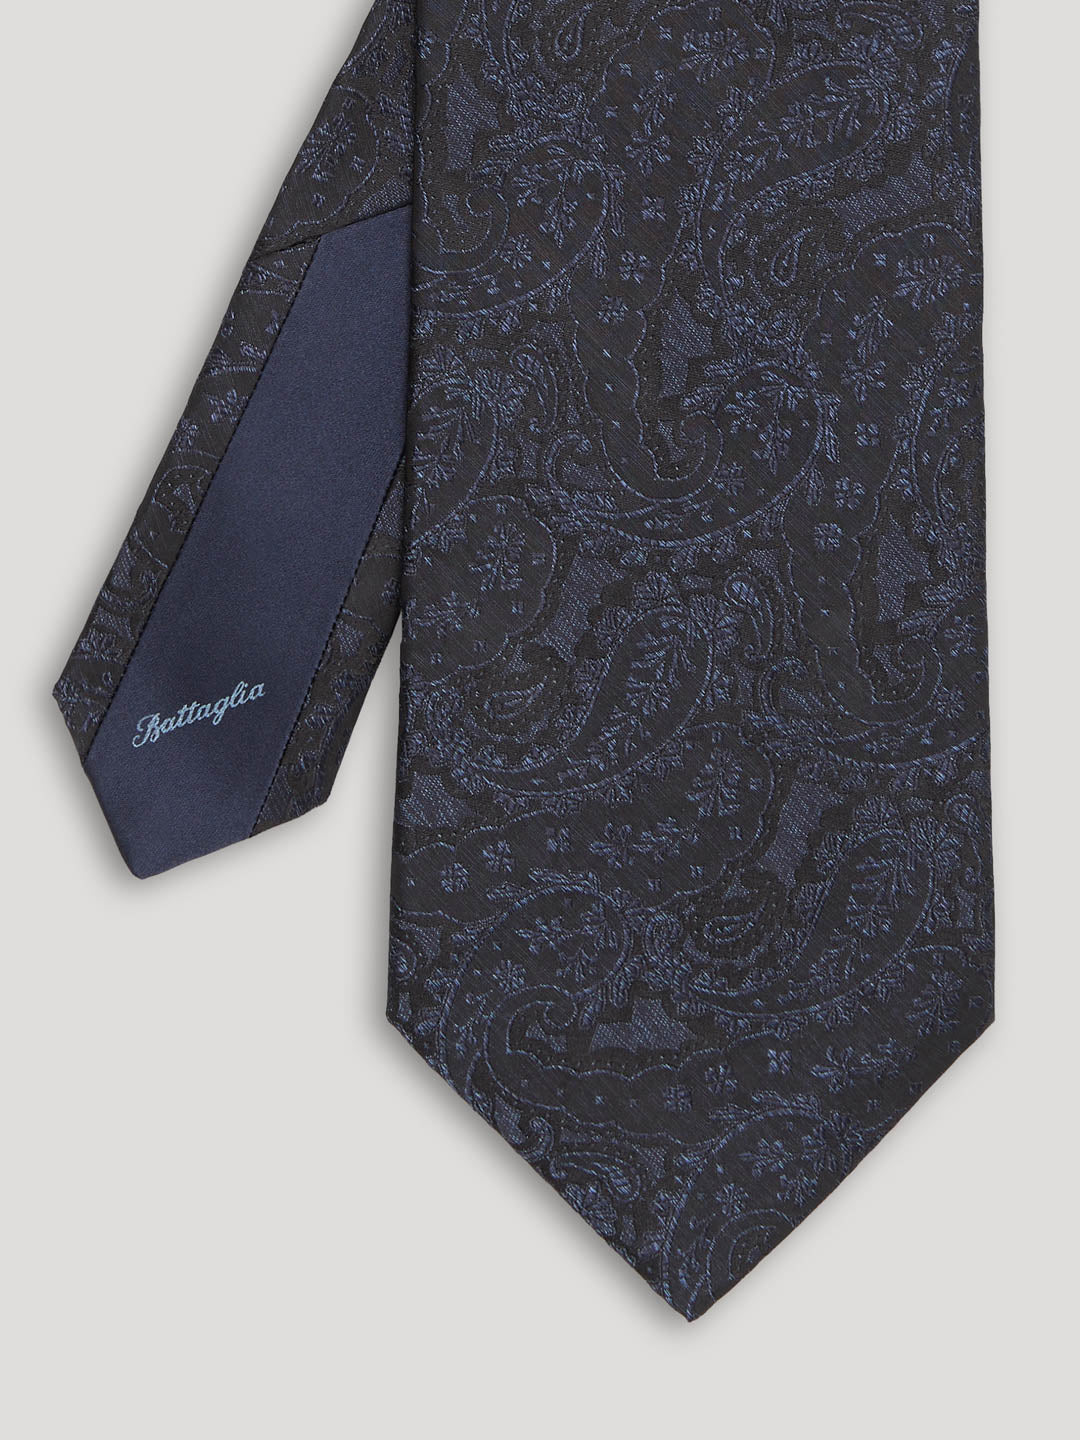 Blue and black silk paisley tie. 